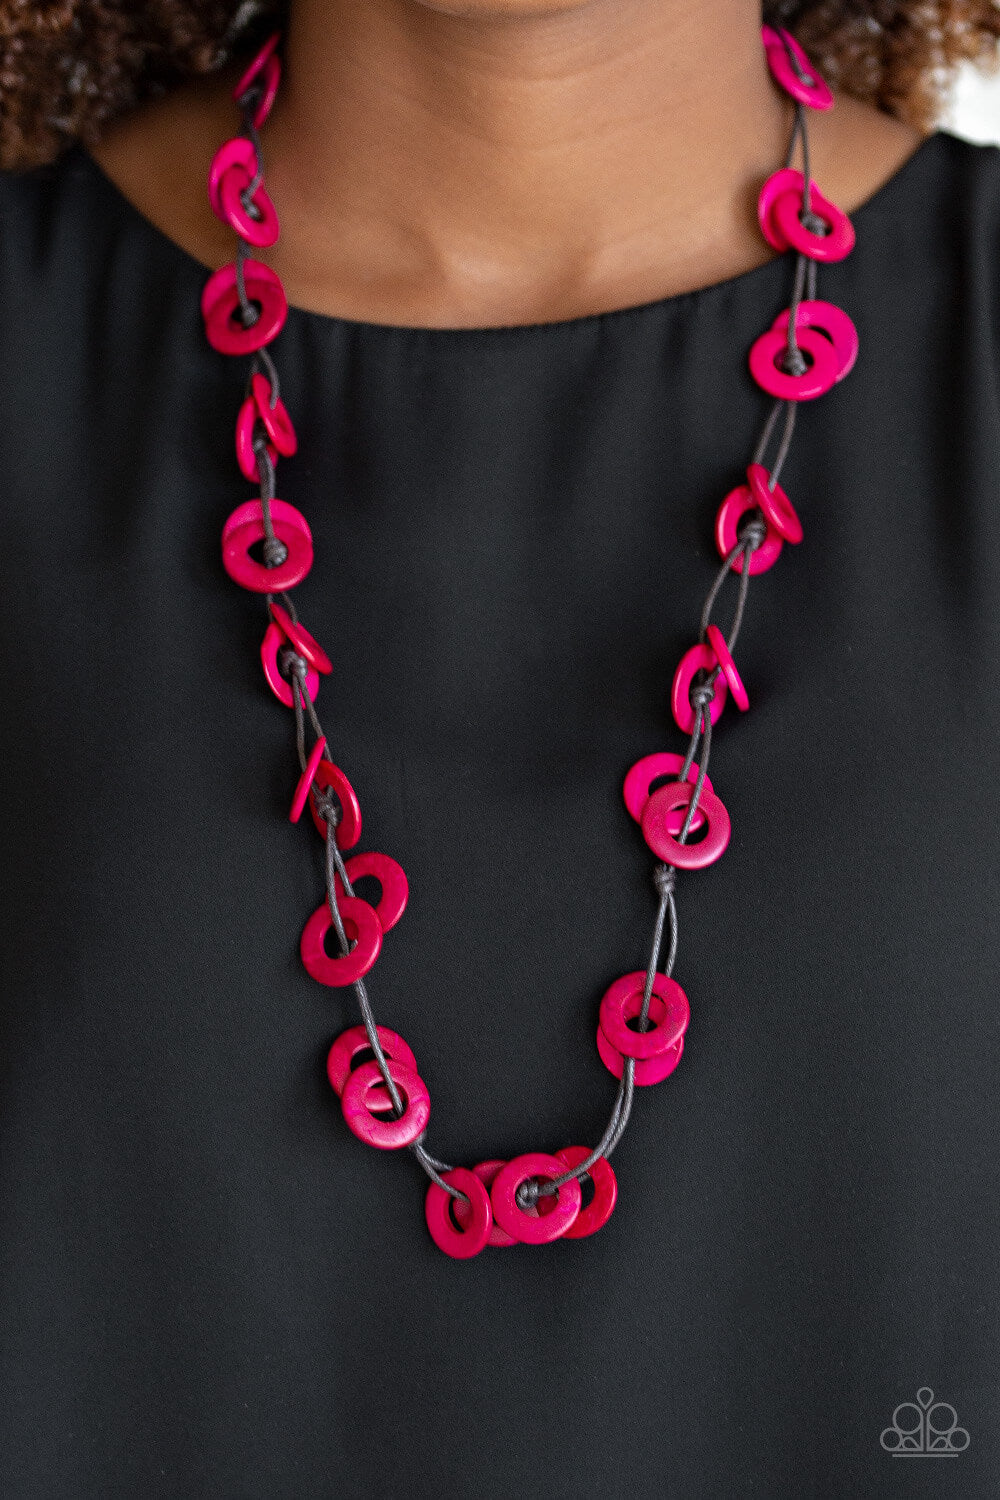 Waikiki Winds - Pink Wood Necklace Set - Princess Glam Shop